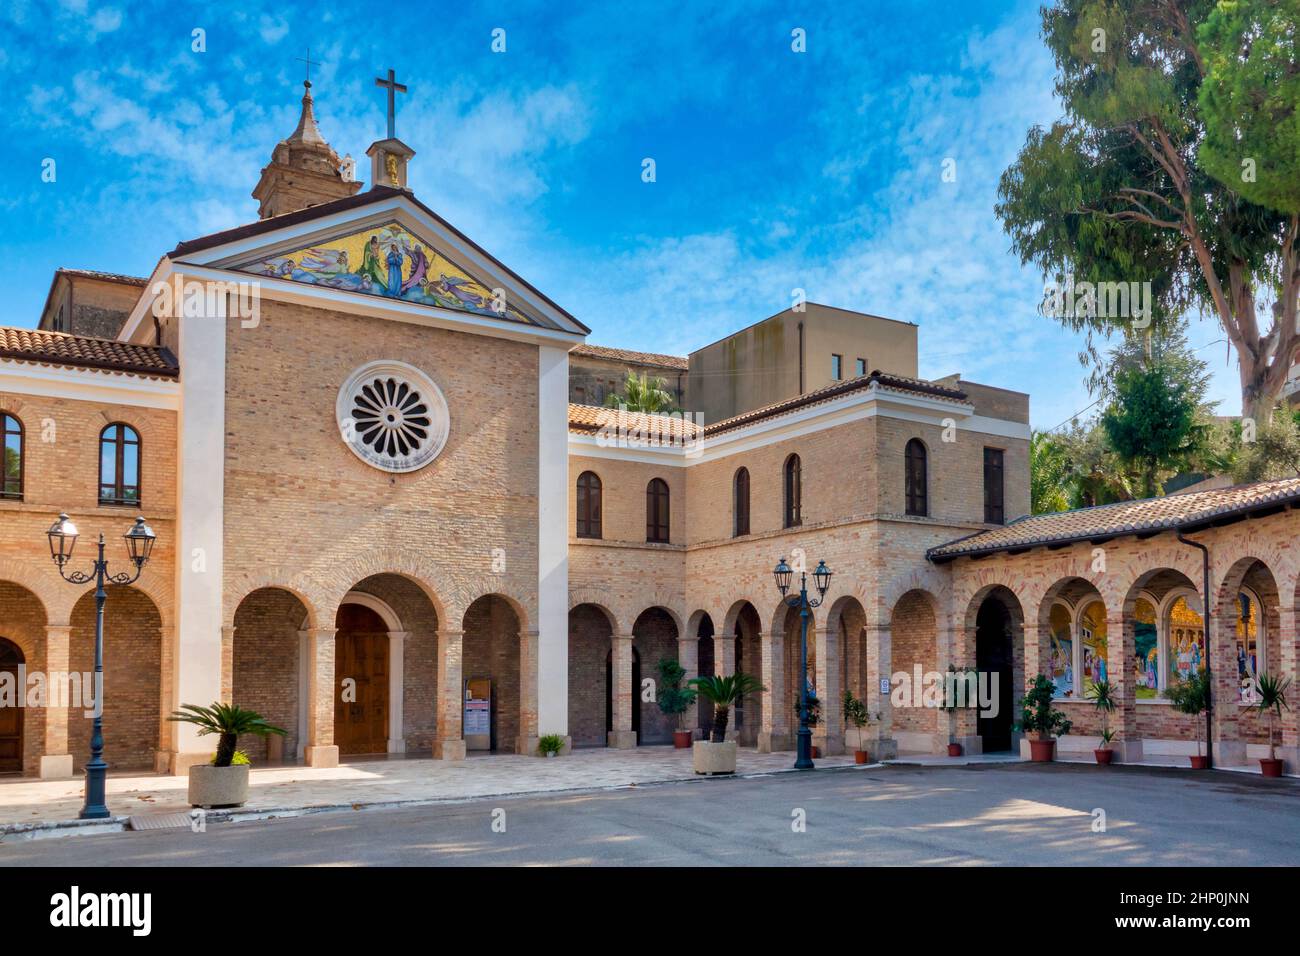 Facade of the Sanctuary Madonna of the Splendor in Giulianova, Italy Stock Photo